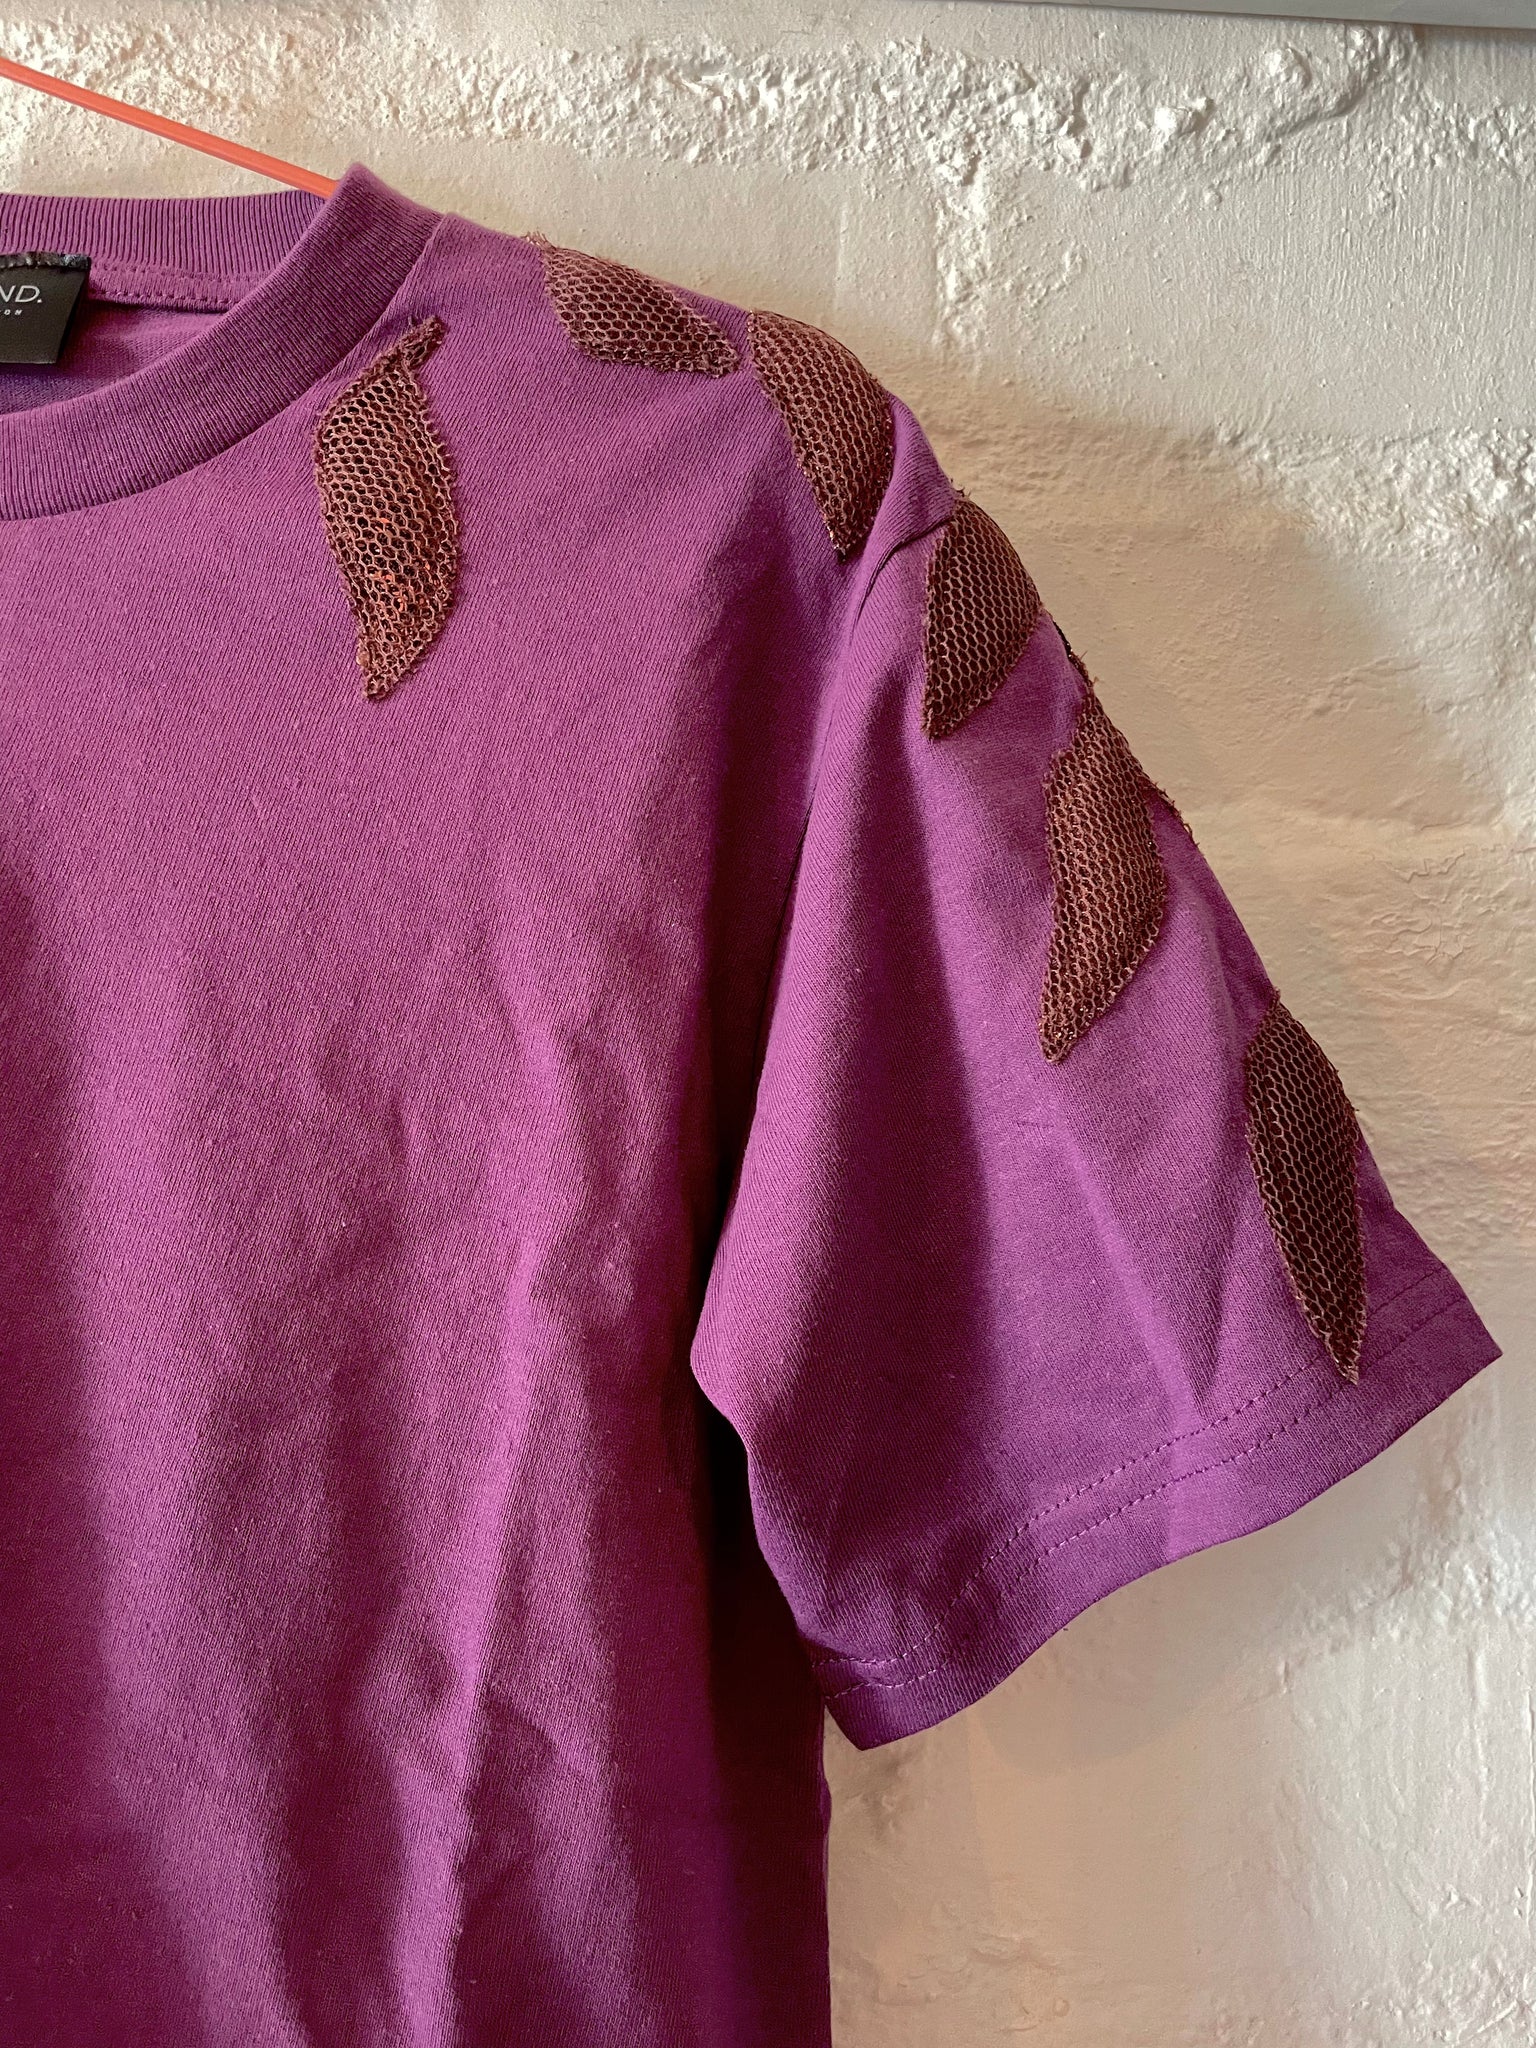 PURPLE FOLIAGE  | T-shirt selection (R150 off any 2 t-shirt +sweater combo)